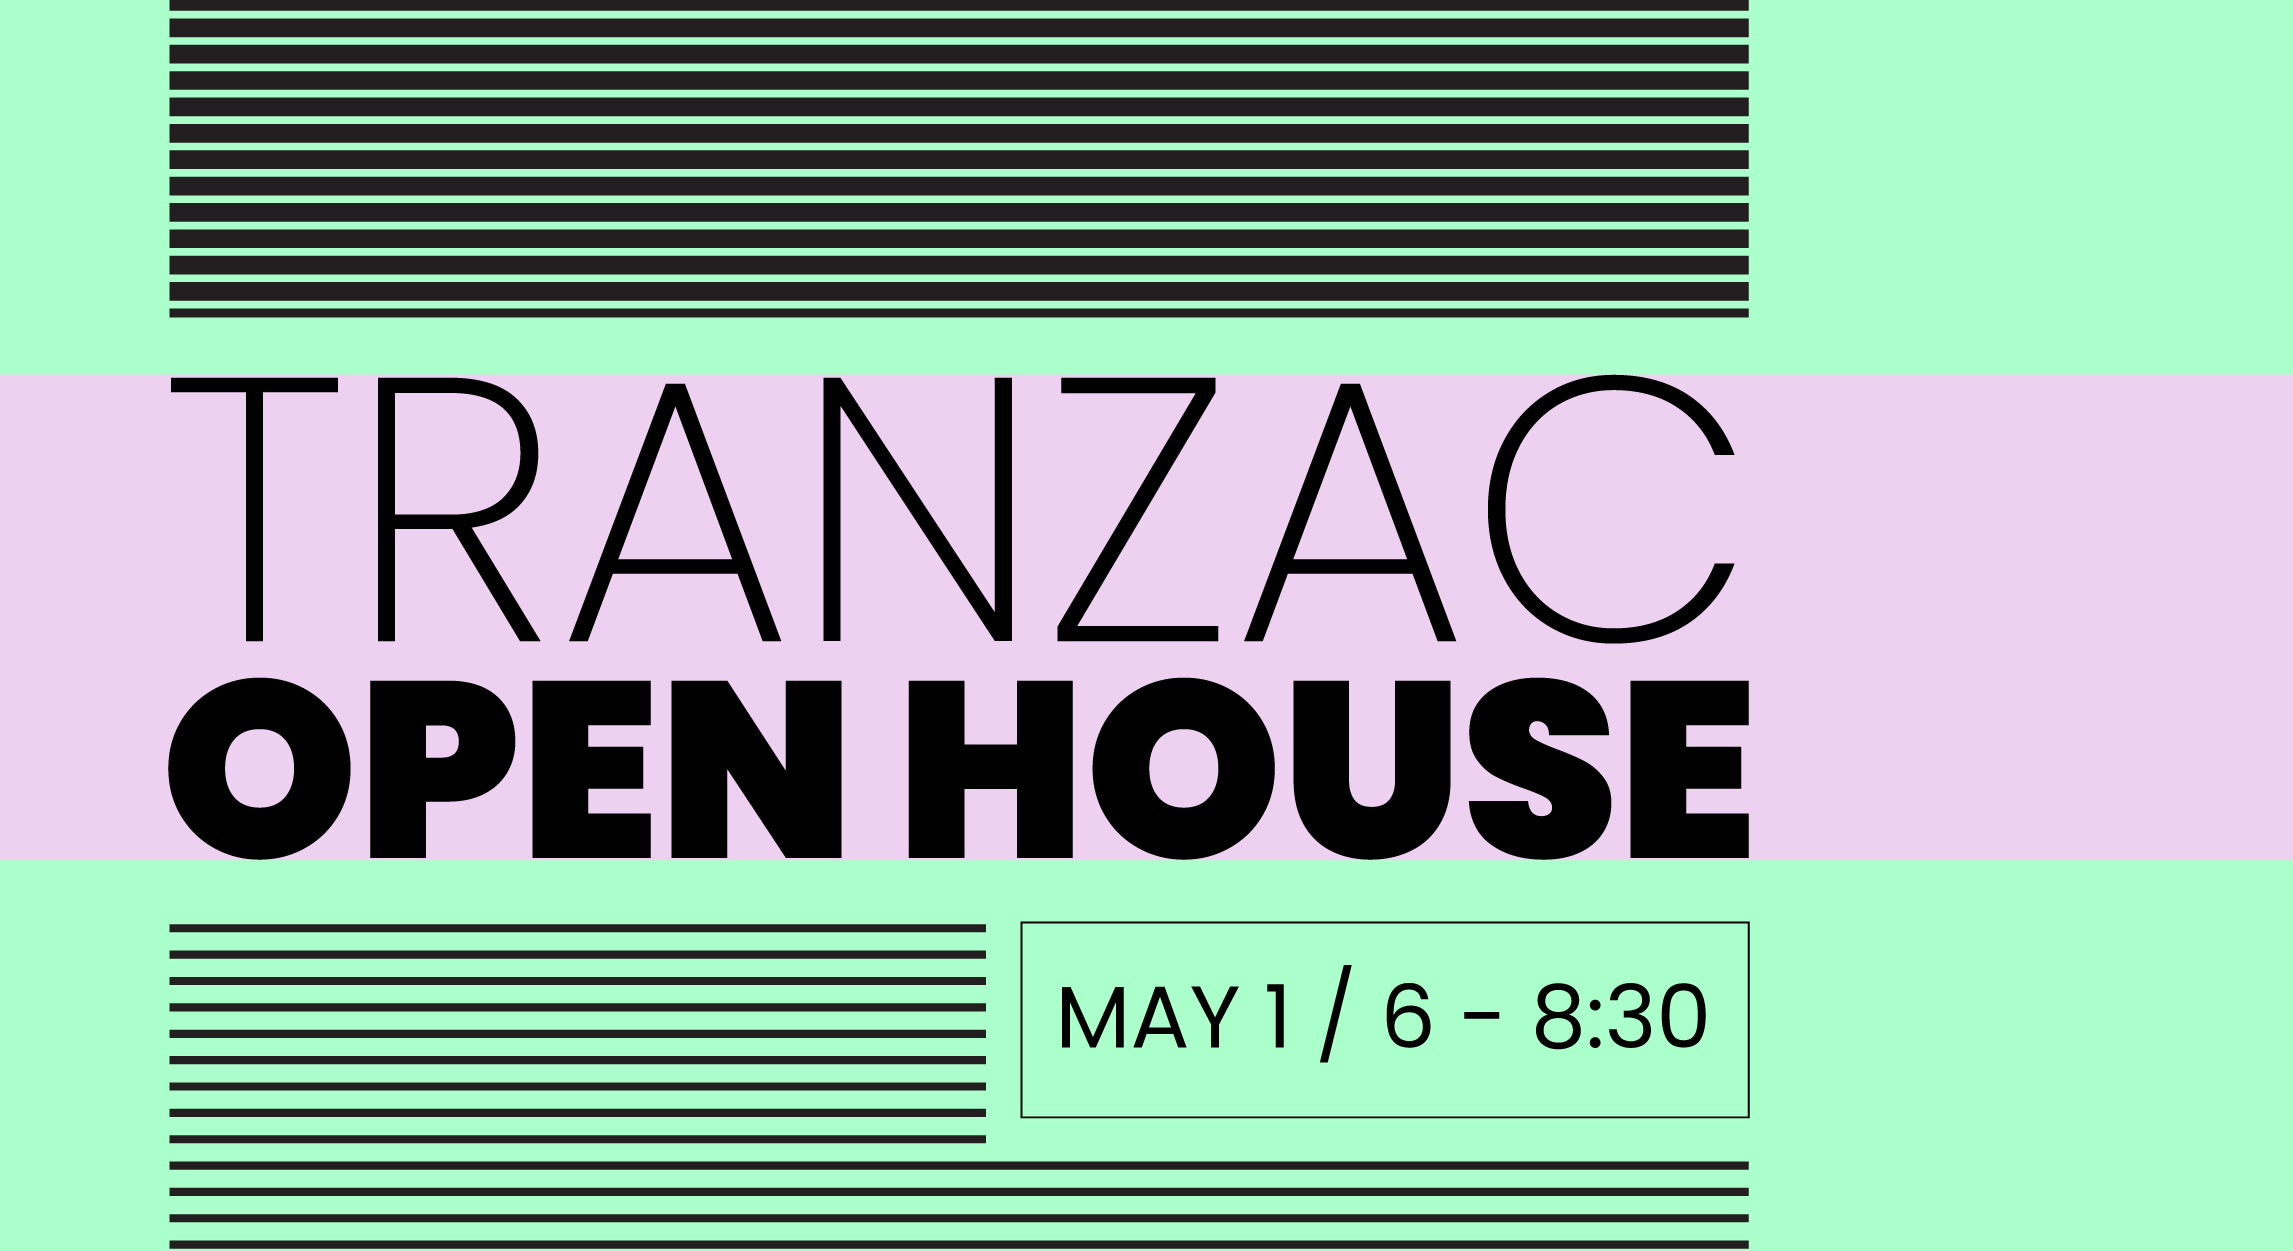 TRANZAC Open House May 1, 6-8:30